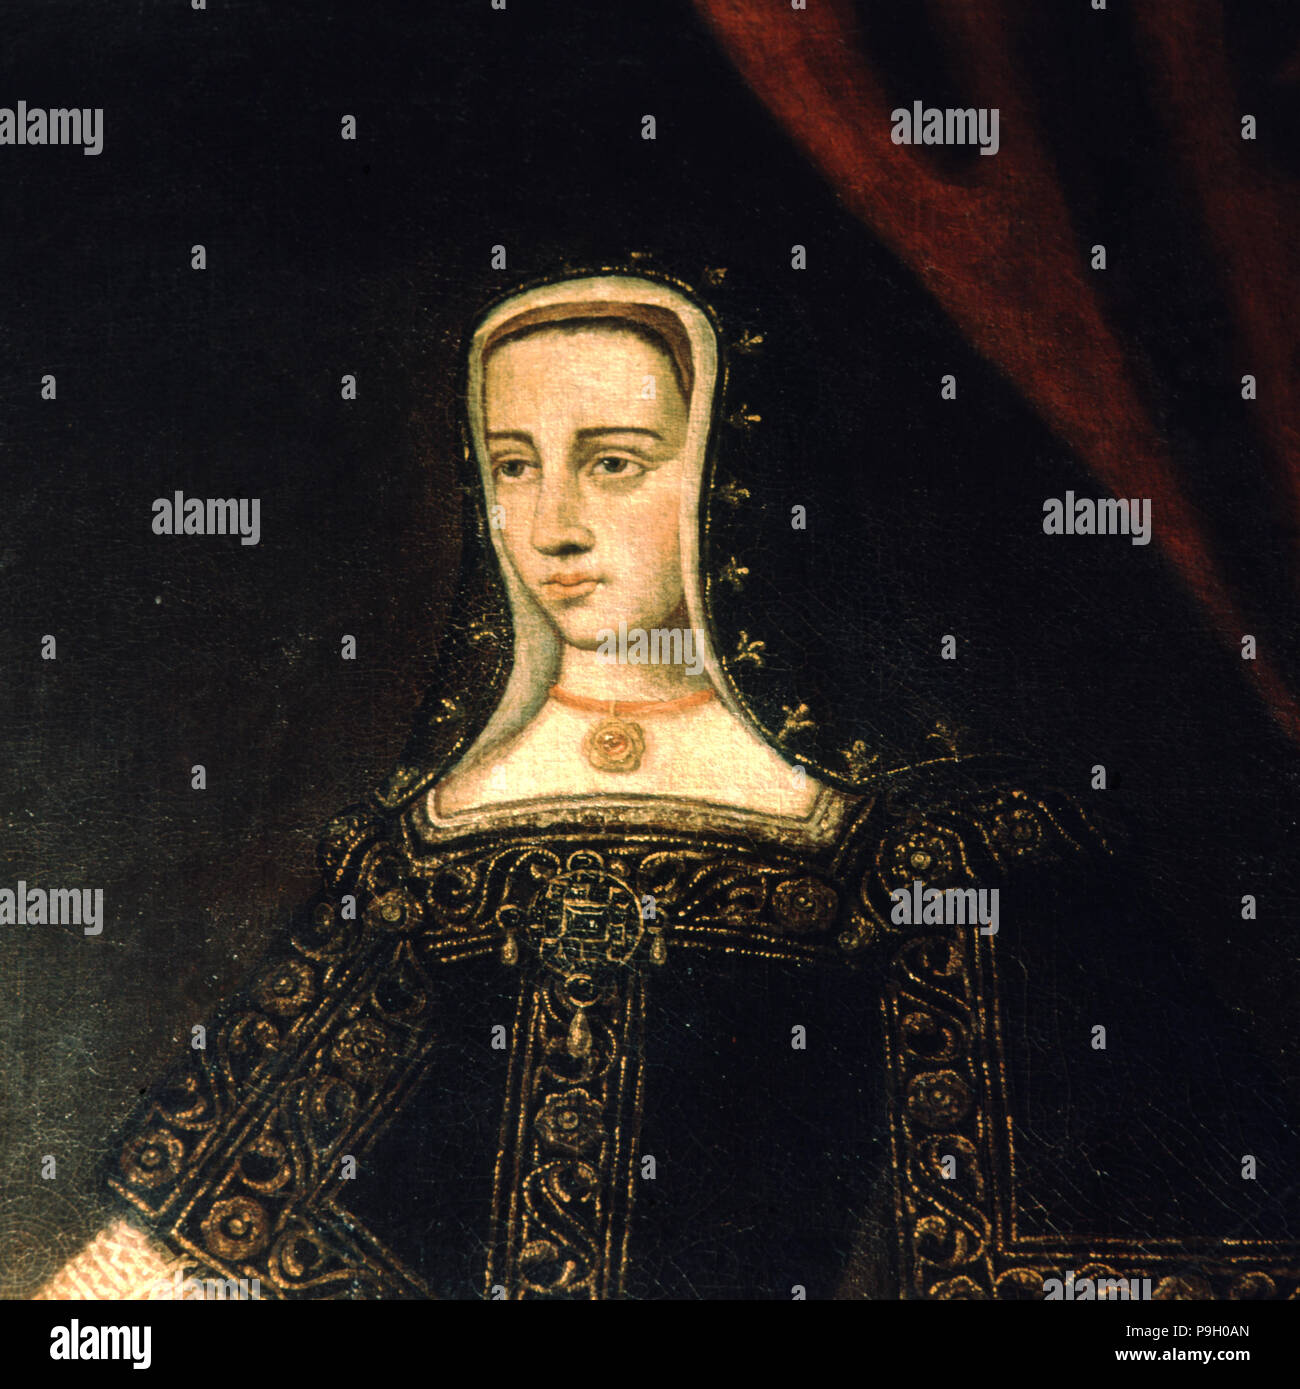 Detail of the portrait 'Juana la Loca' (1479-1555), Queen of Castile and daughter of the Catholic… Stock Photo